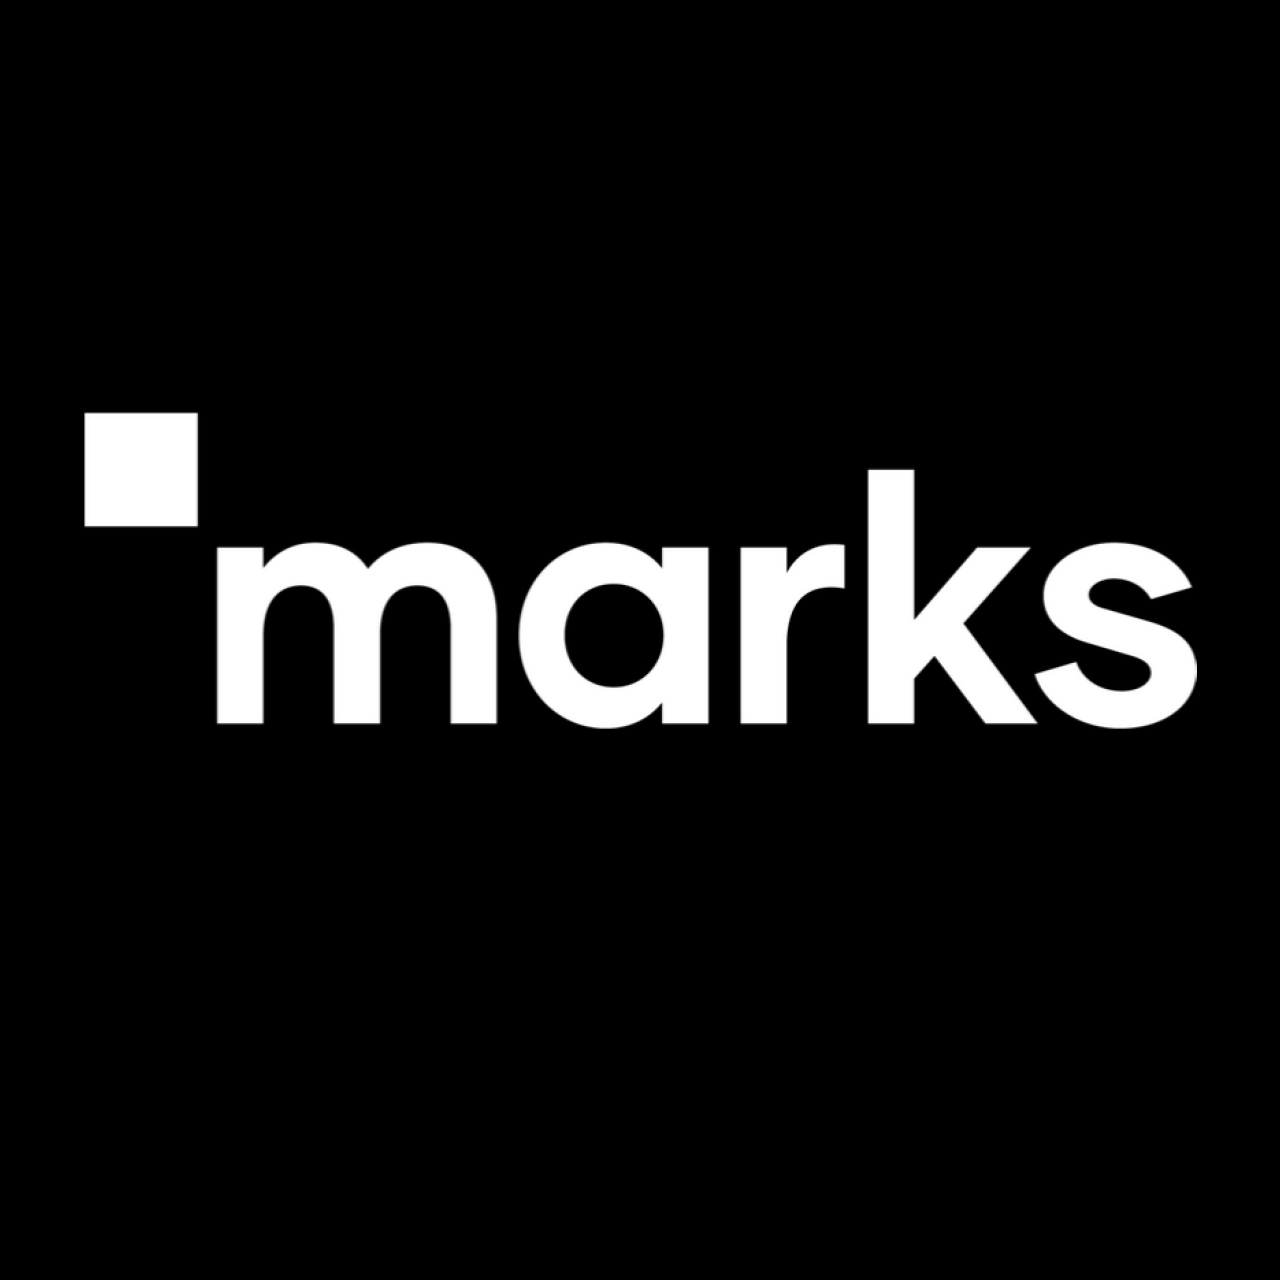 Marks Design | Stash Jobs